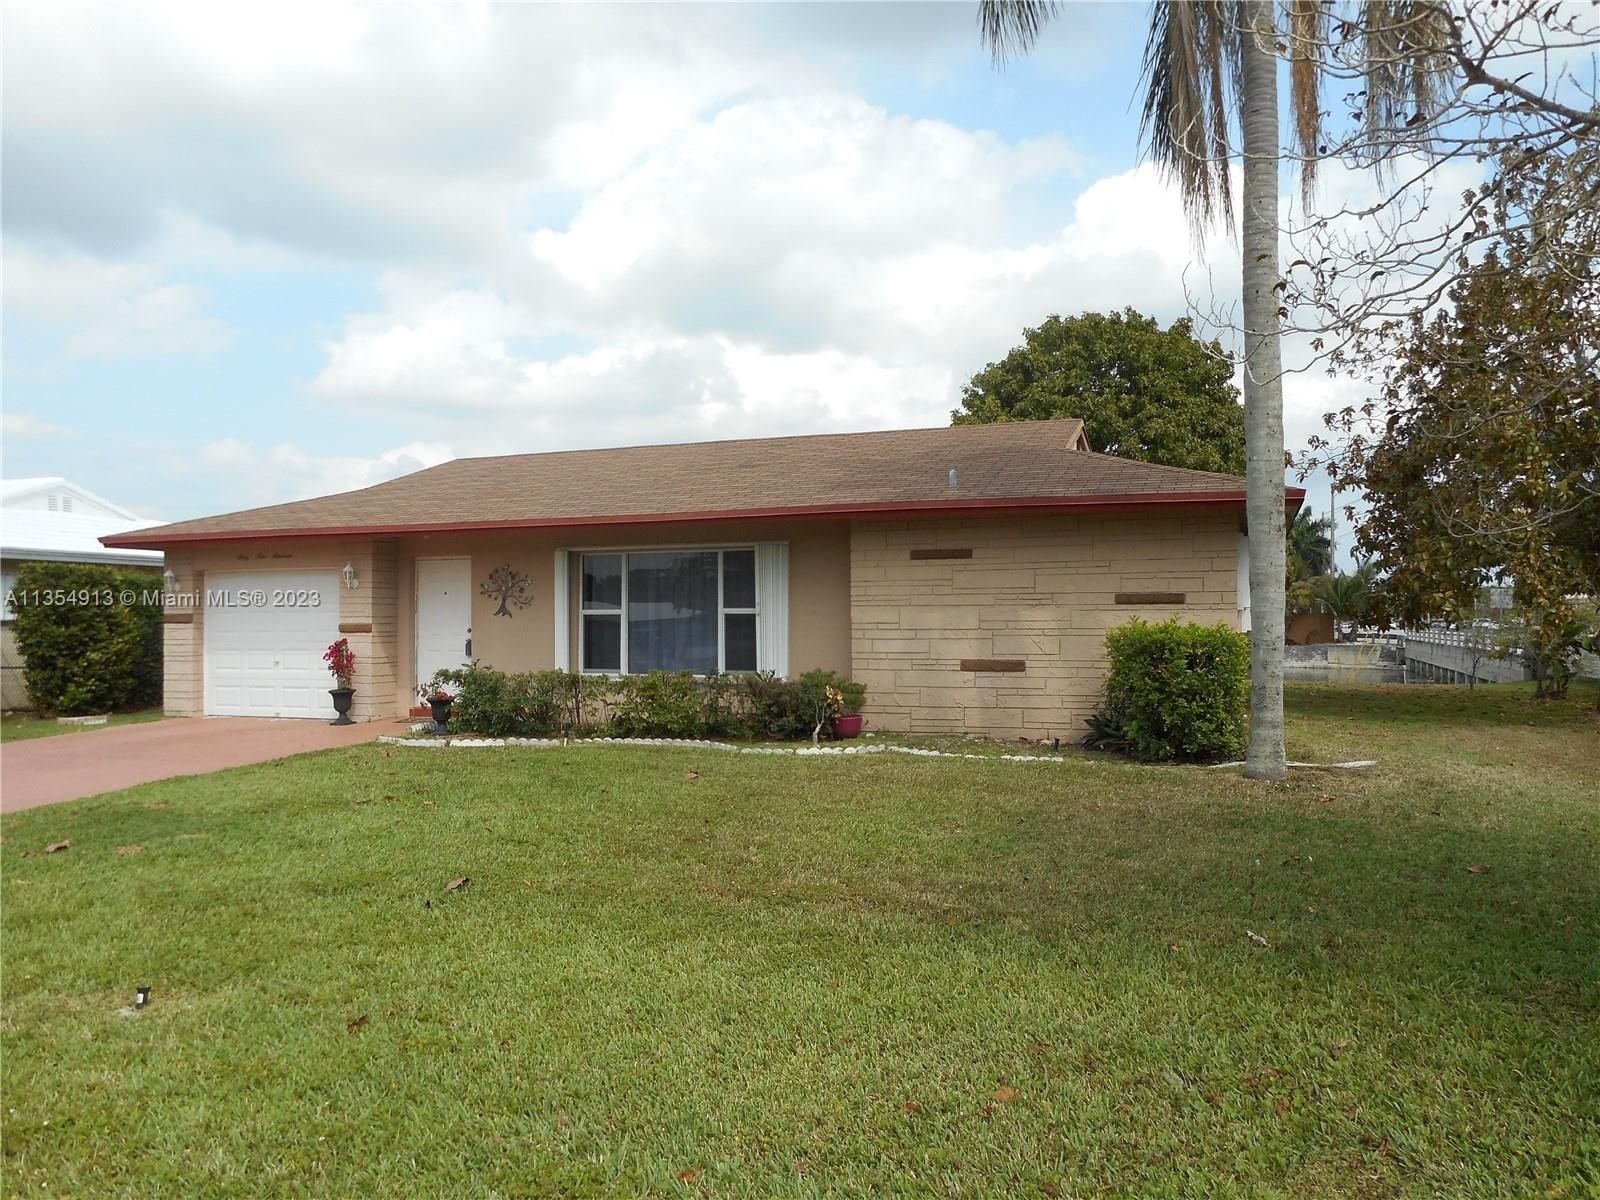 Real estate property located at 6900 89th Ave, Broward County, Tamarac, FL